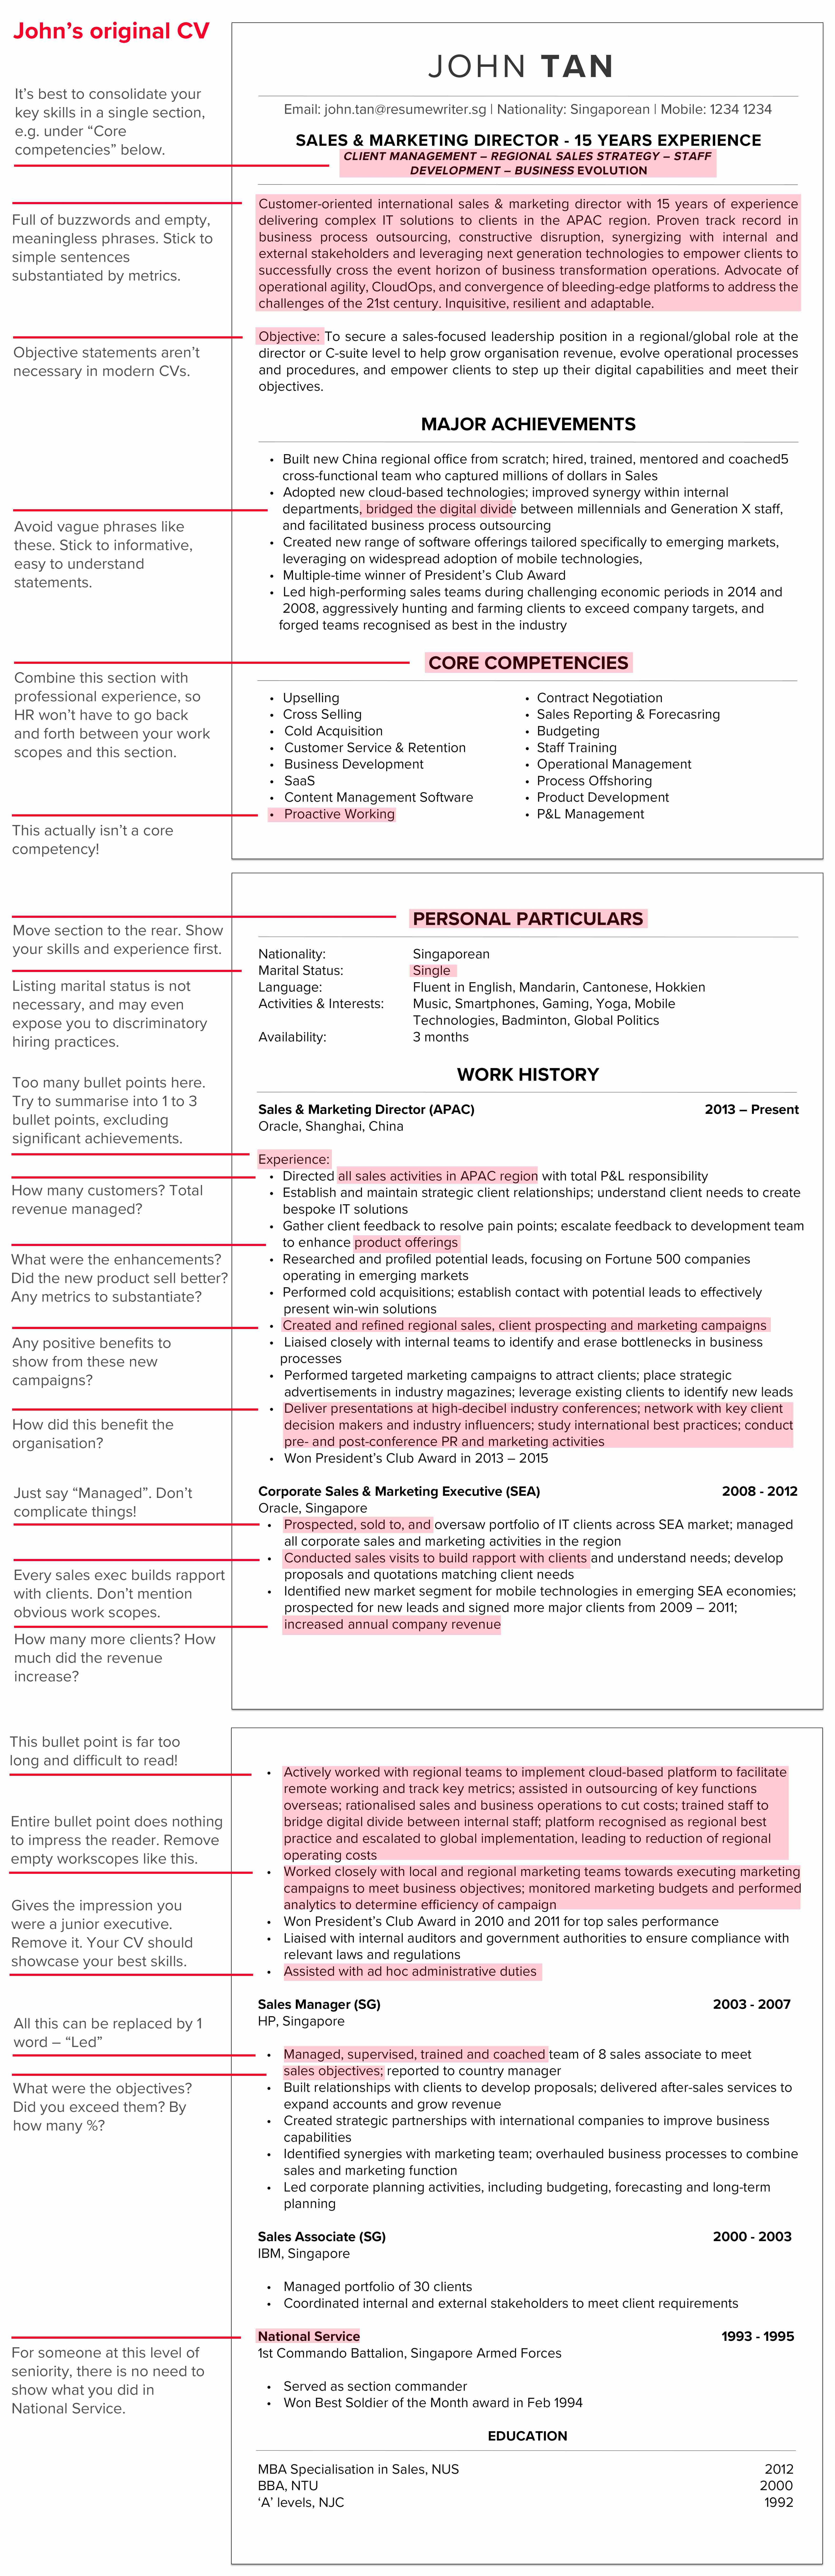 CV Annotated John S Original CV Red Min 1